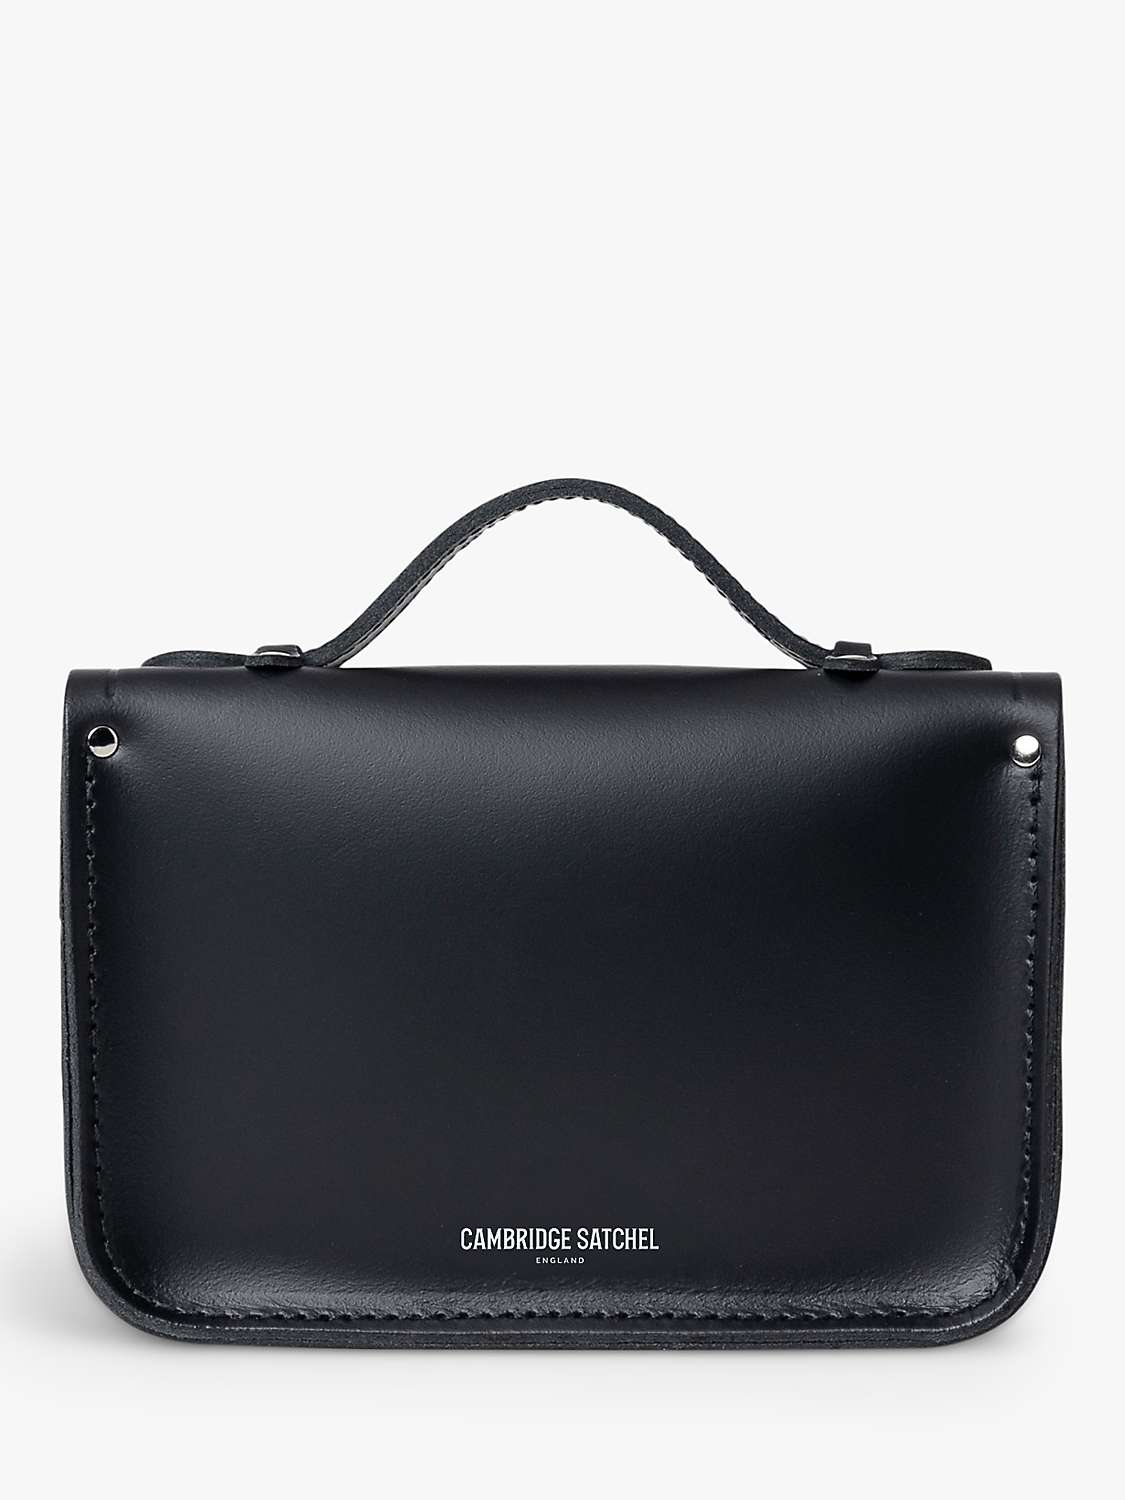 Buy Cambridge Satchel The Mini Leather Satchel Online at johnlewis.com